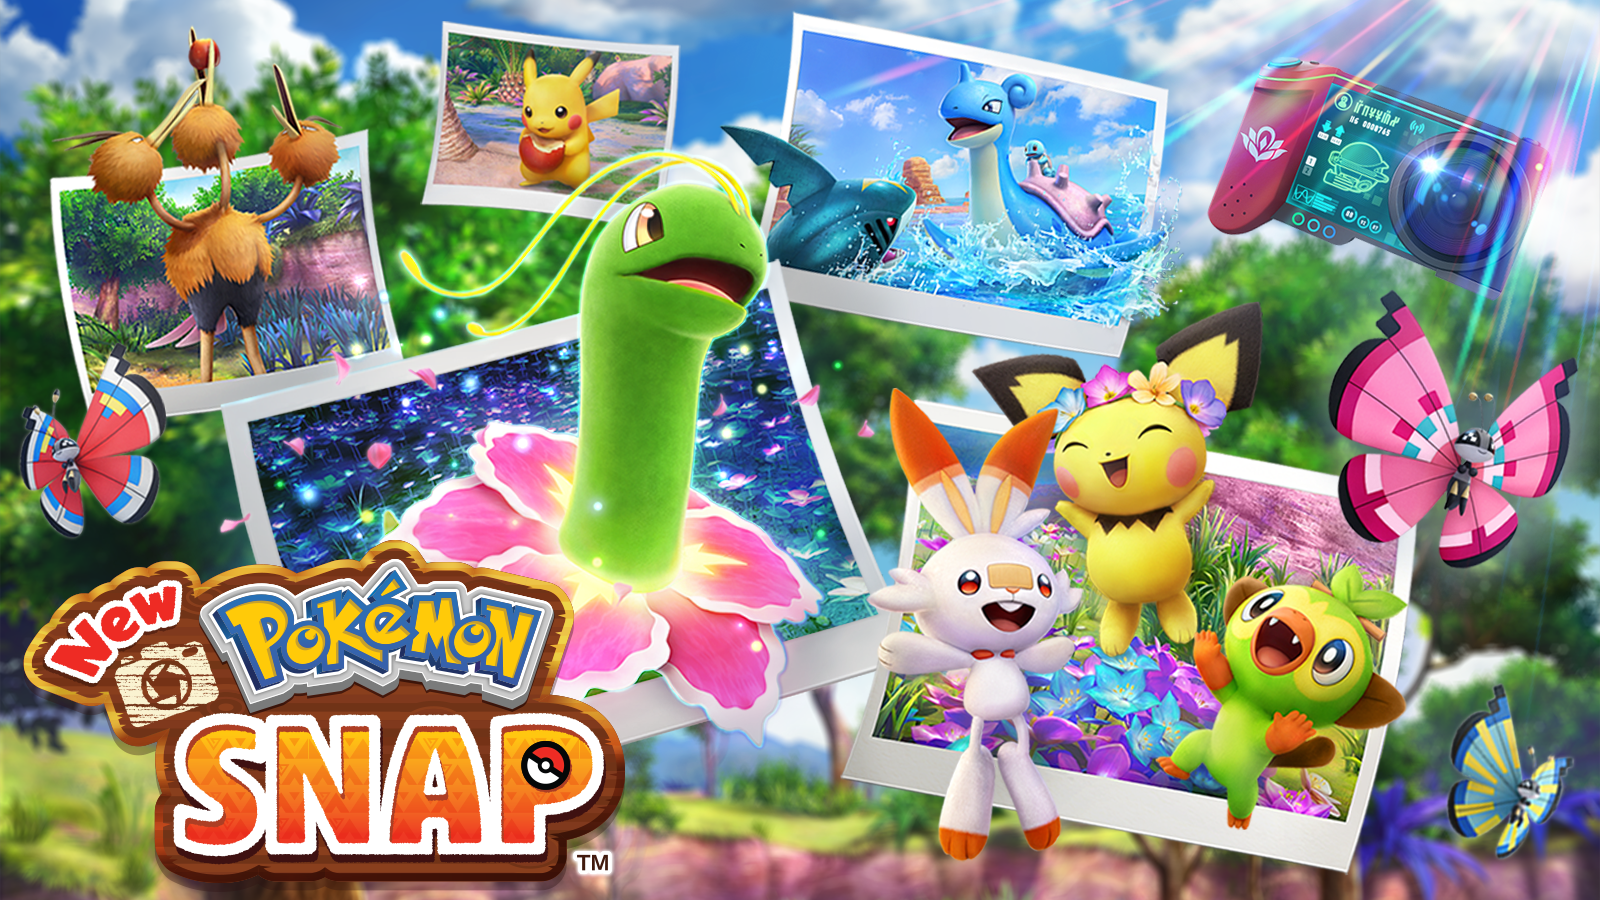 New Pokemon Snap' will help budding photographers starting April 30